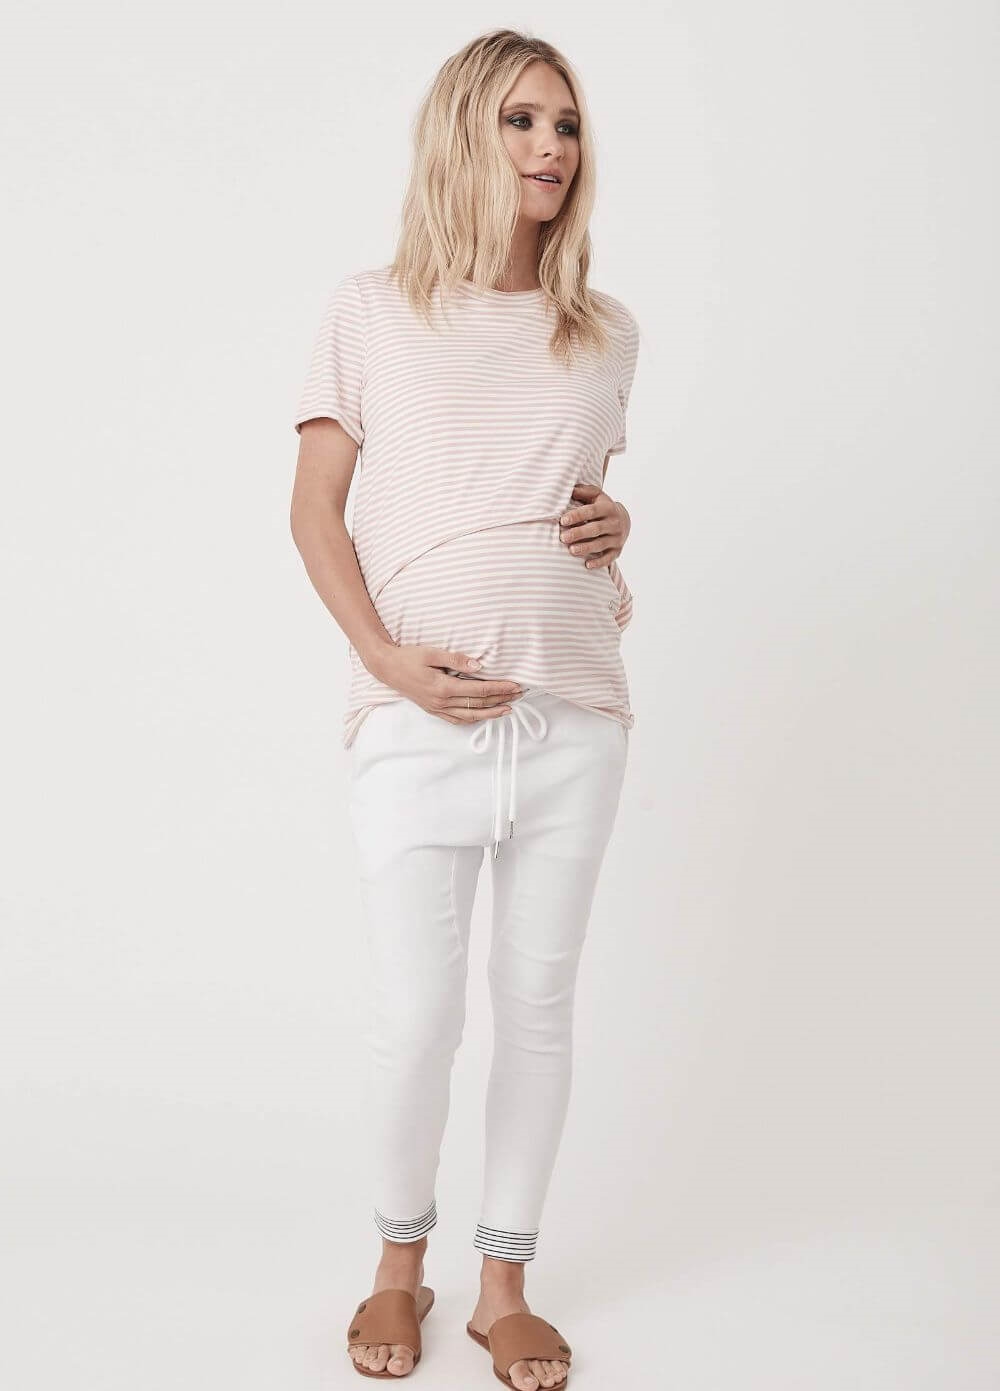 Legoe - Valance Maternity Nursing Tee II in White/Pink Stripe